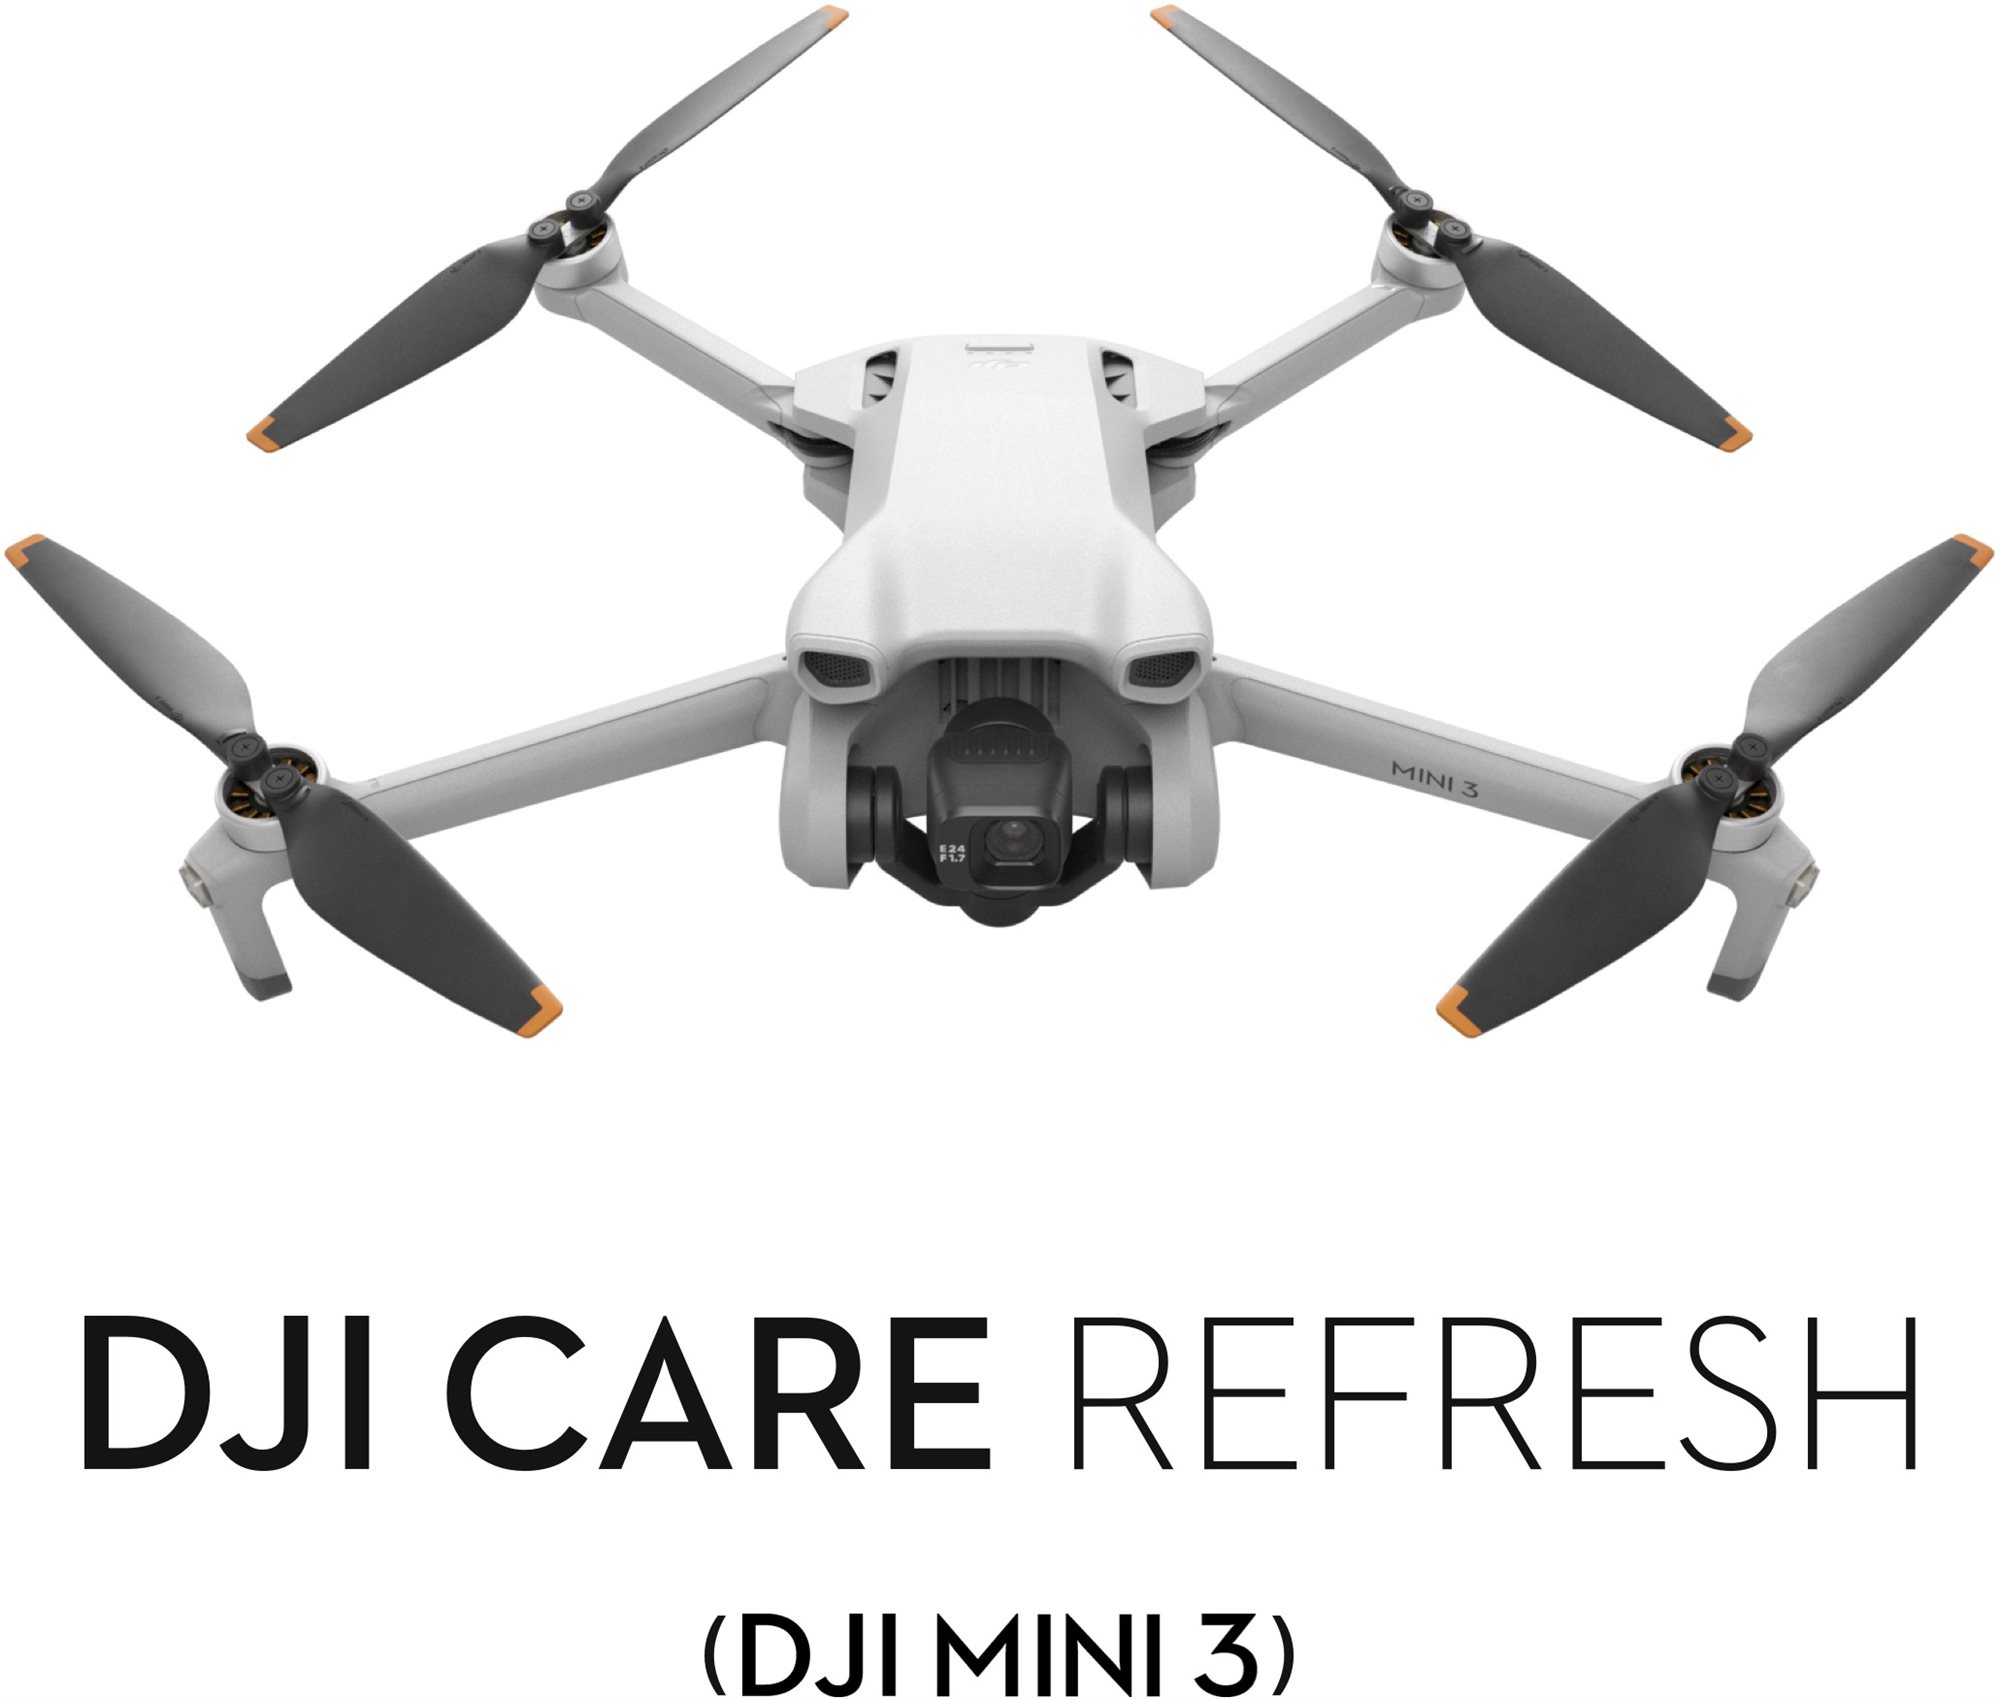 DJI Care Refresh 2-Year Plan (DJI Mini 3) EU